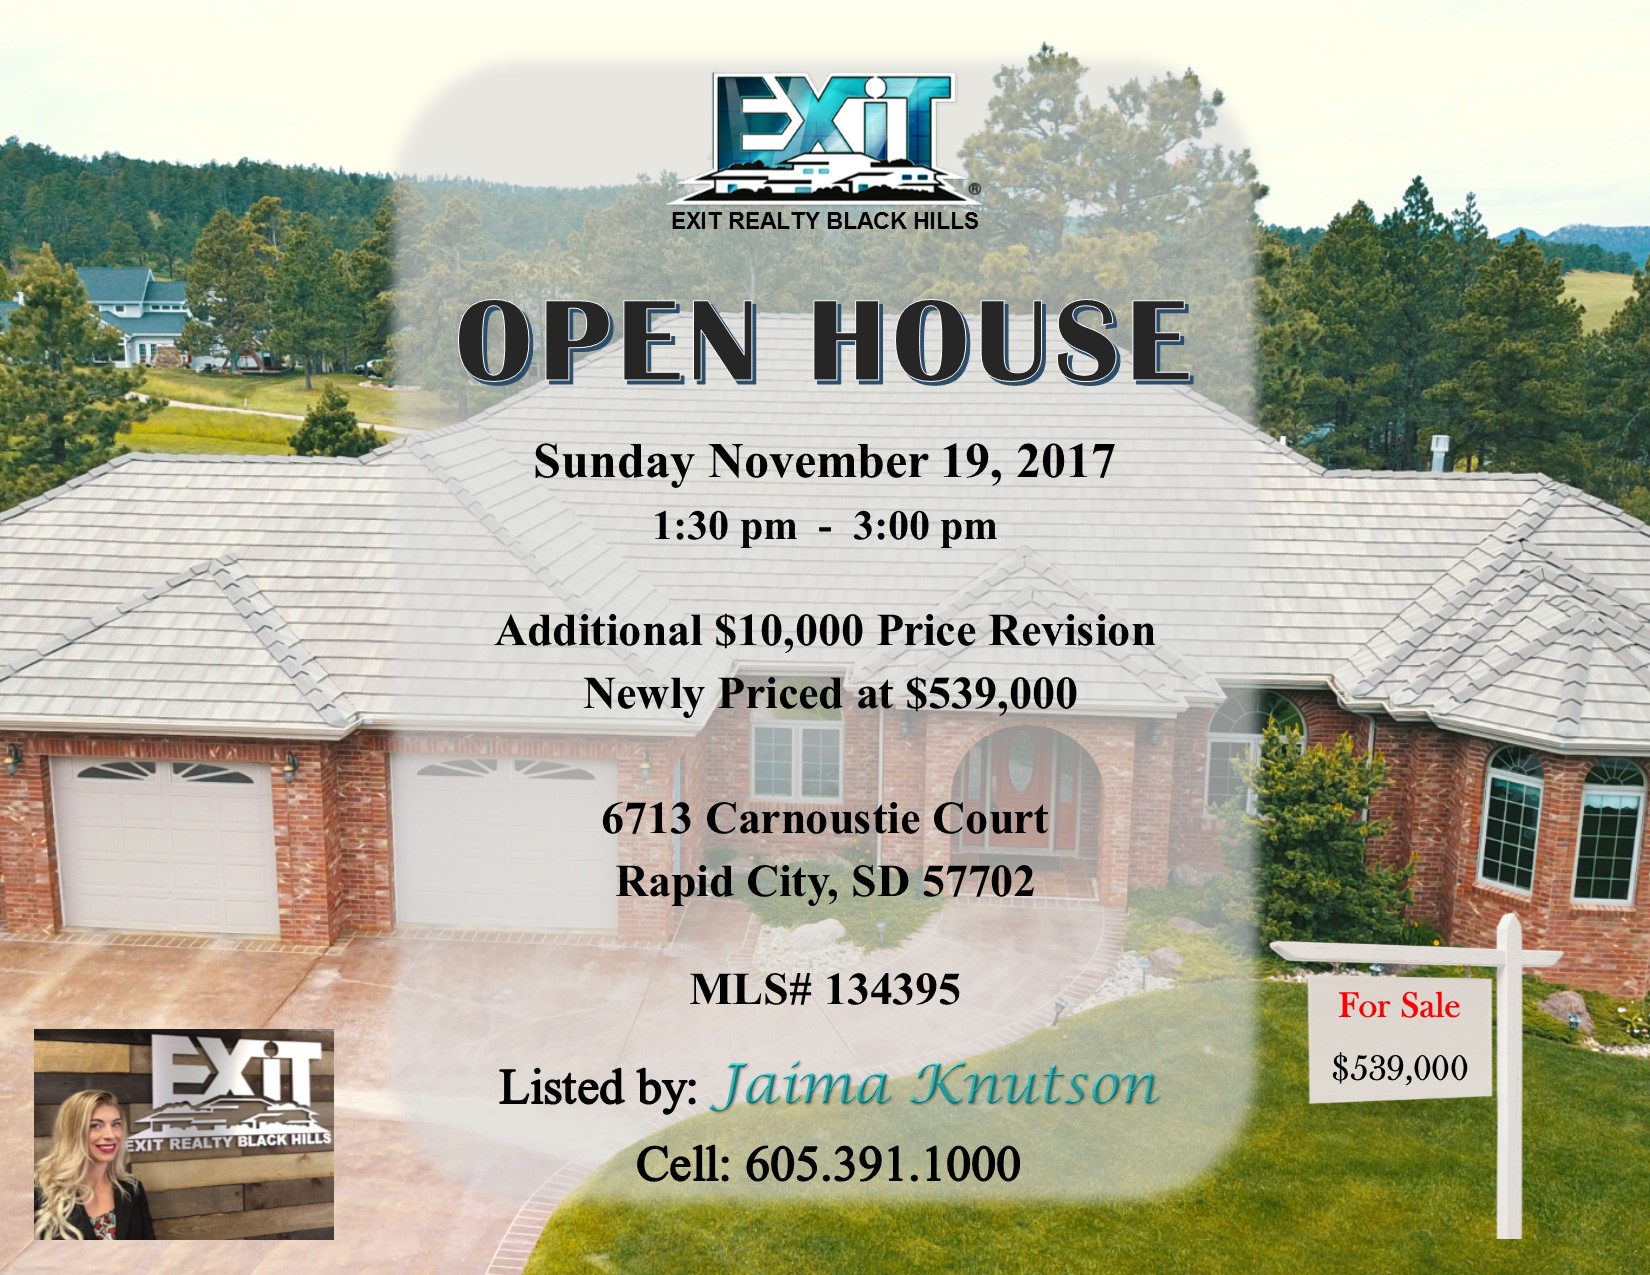 Open House Sunday November 19, 2017